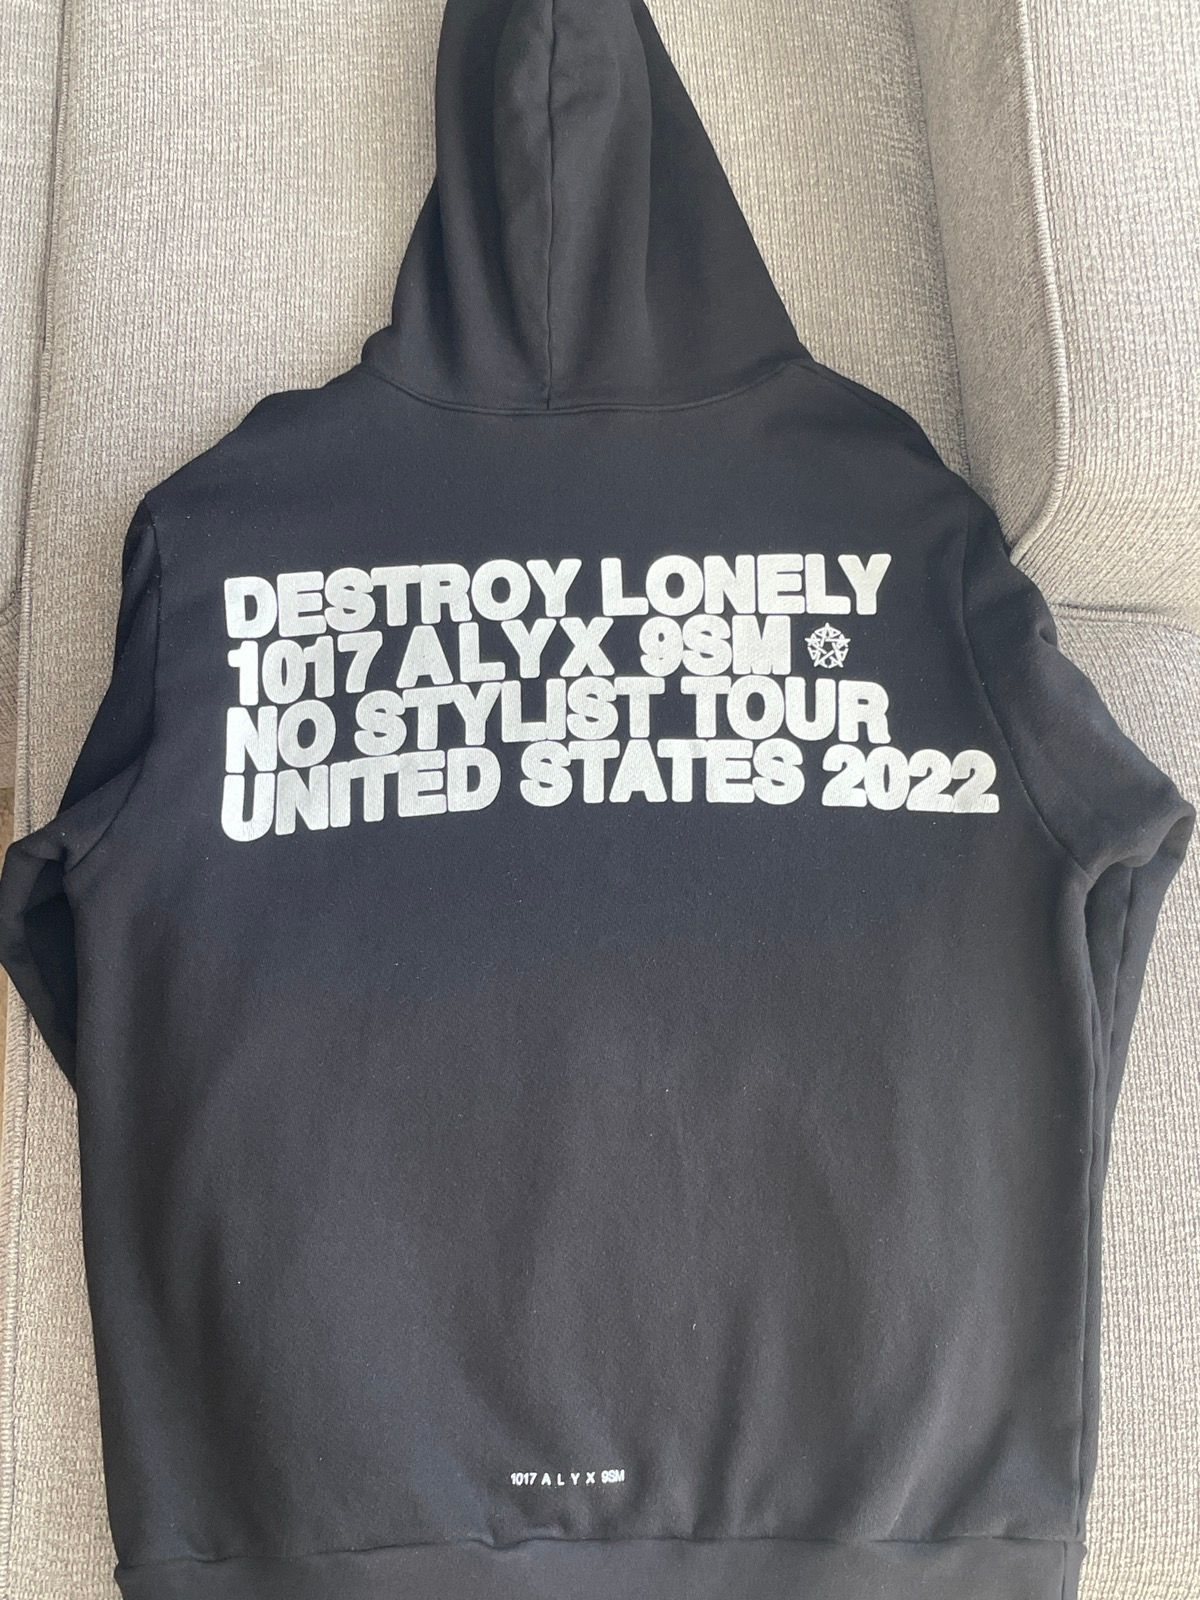 1017 ALYX 9SM Destroy lonely Alyx tour hoodie | Grailed